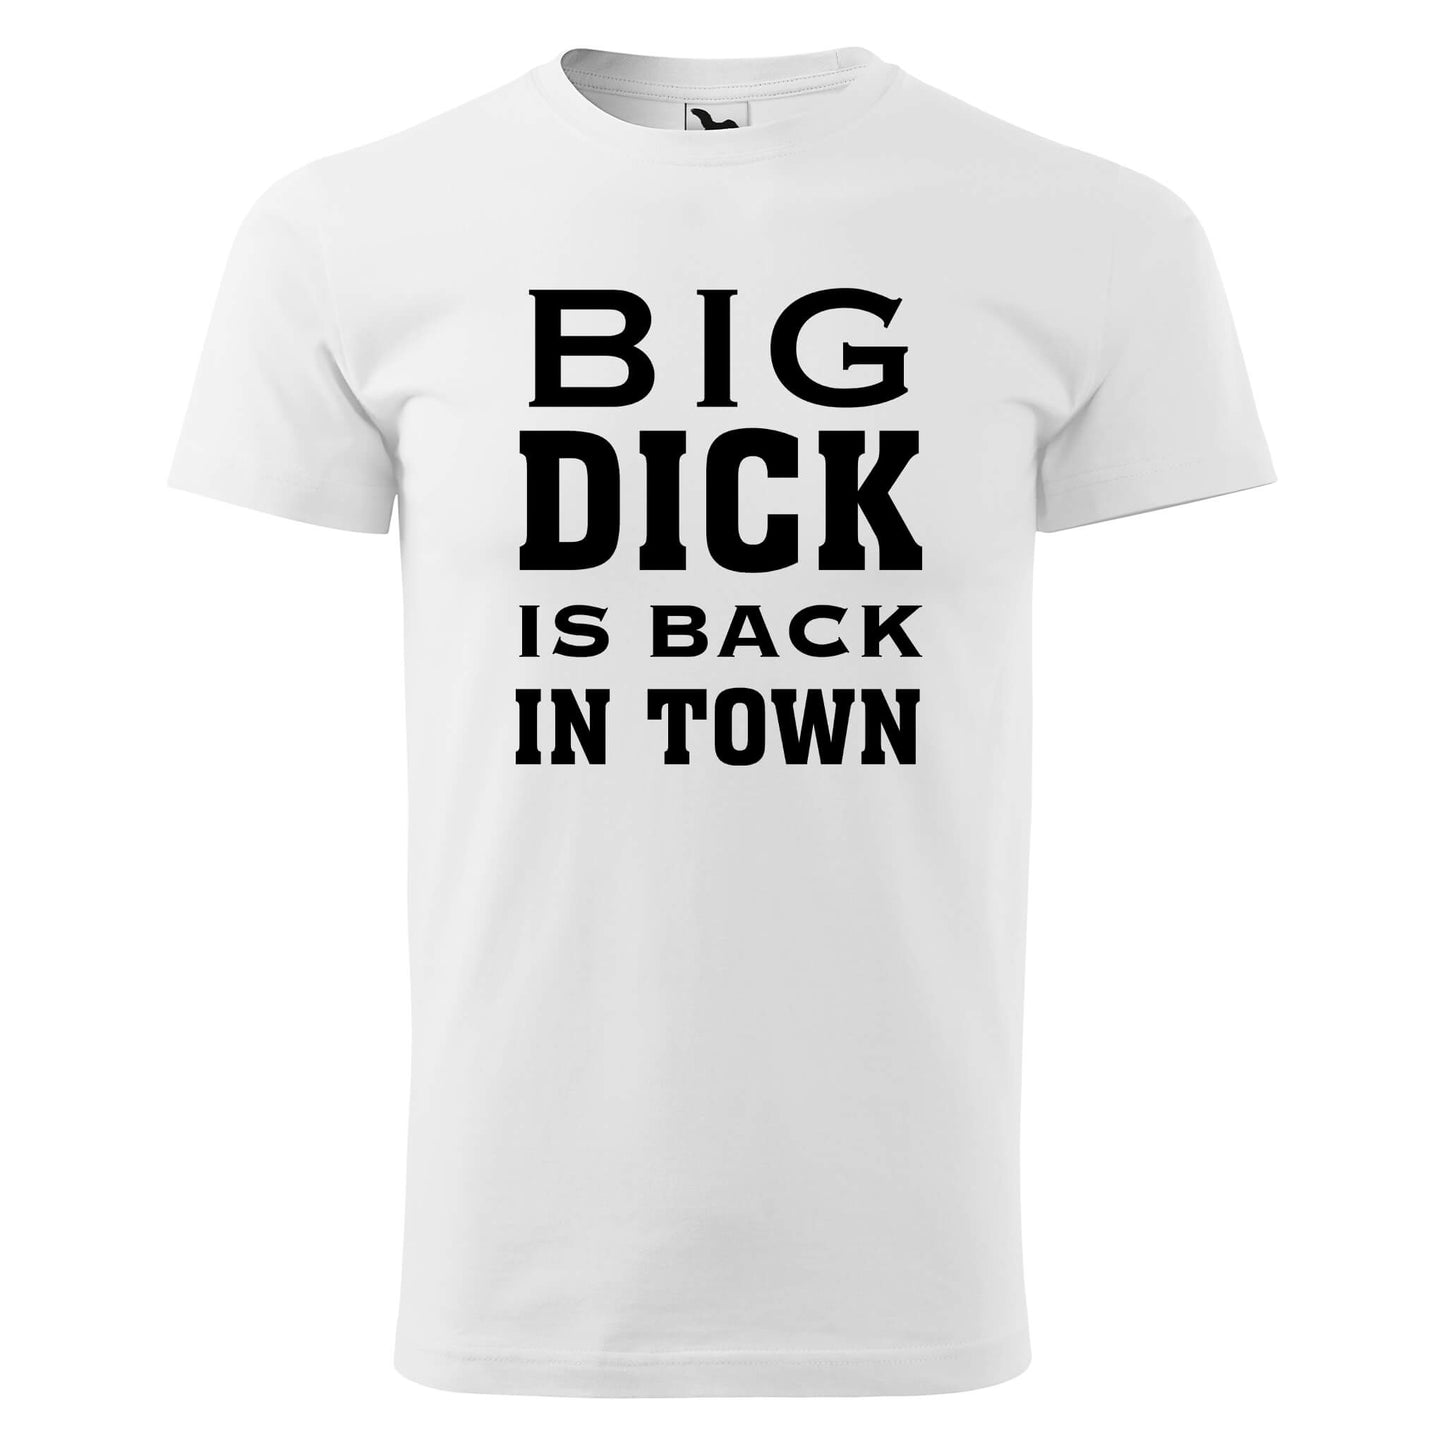 Póló - Big dick is back in town